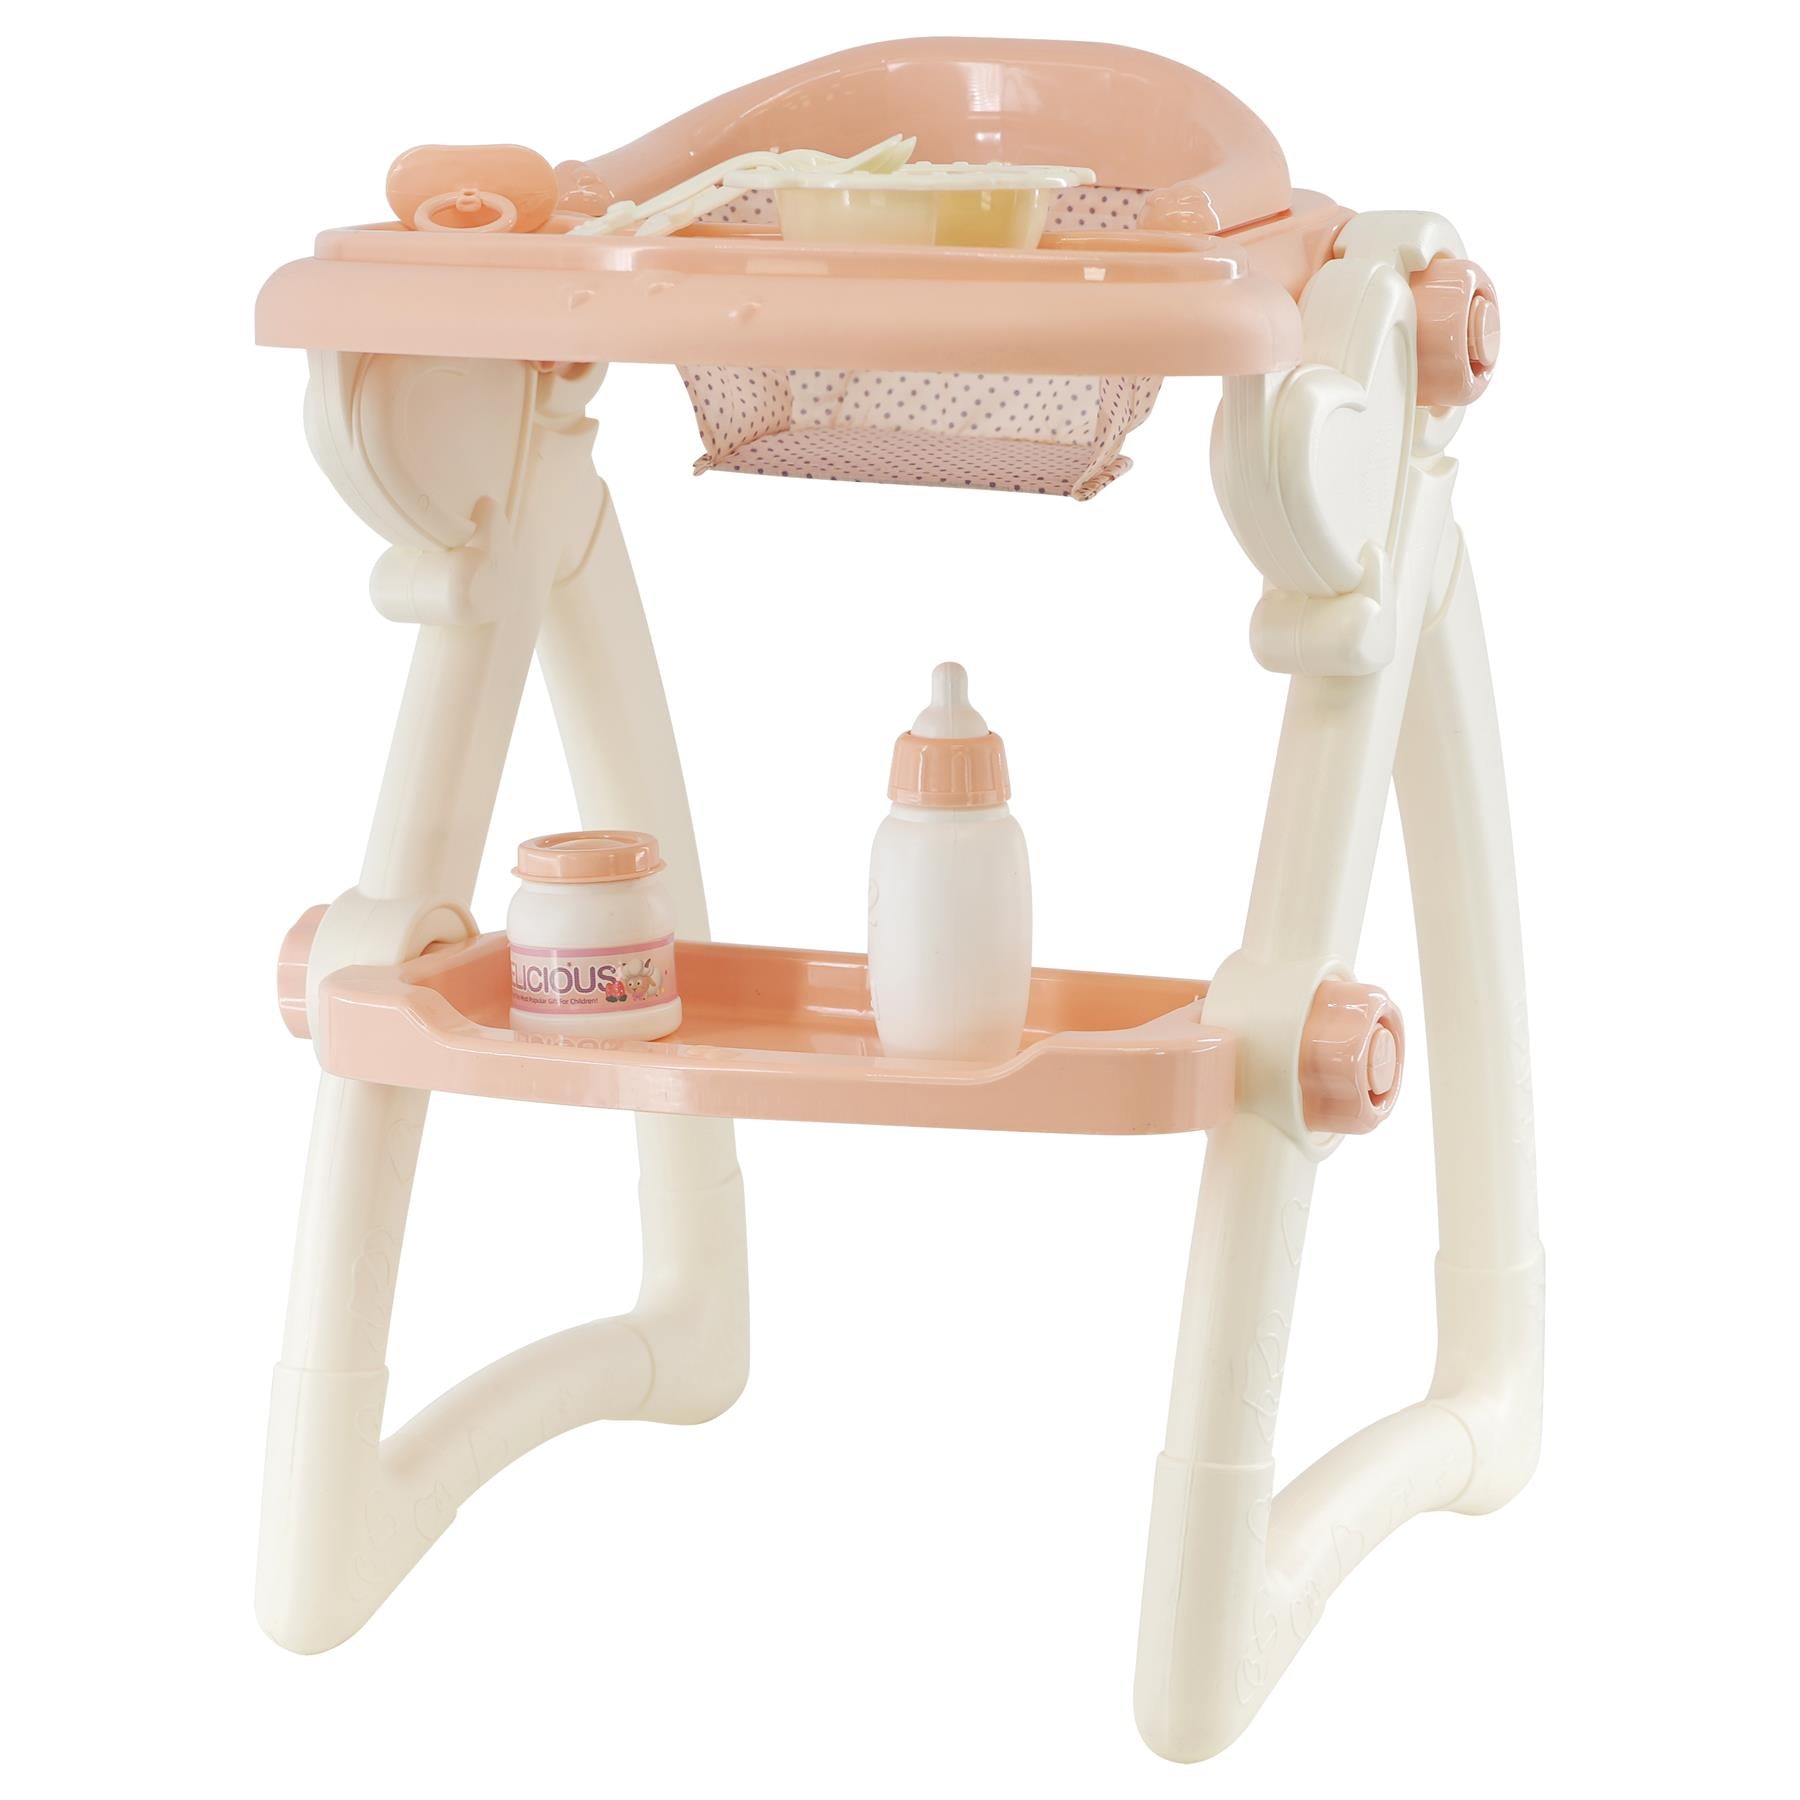 BiBi Doll Doll Furniture Baby Dolls Feeding High Chair Kids Play Set